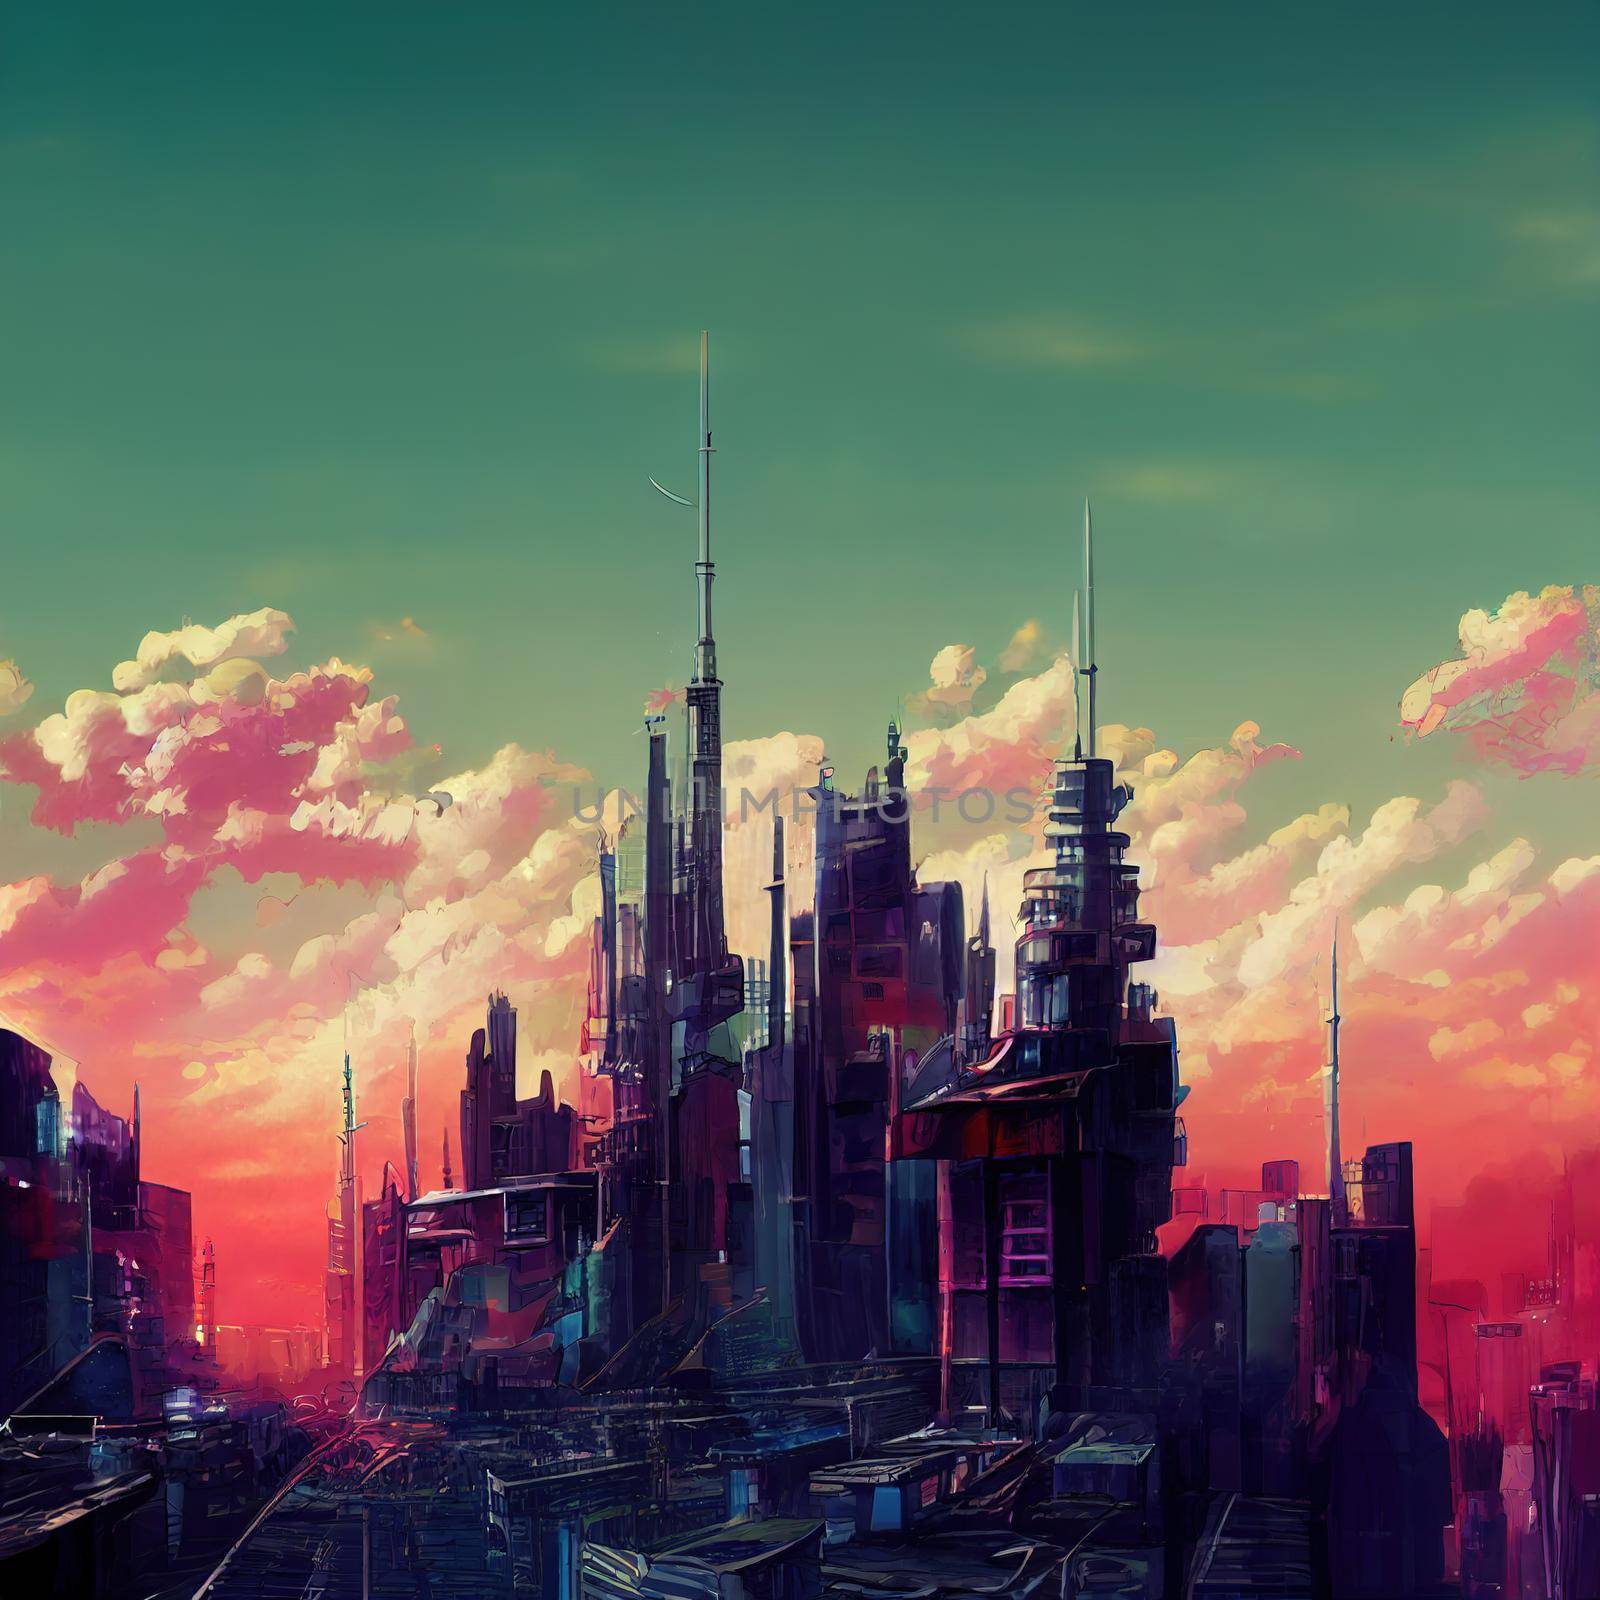 anime style city by 2ragon